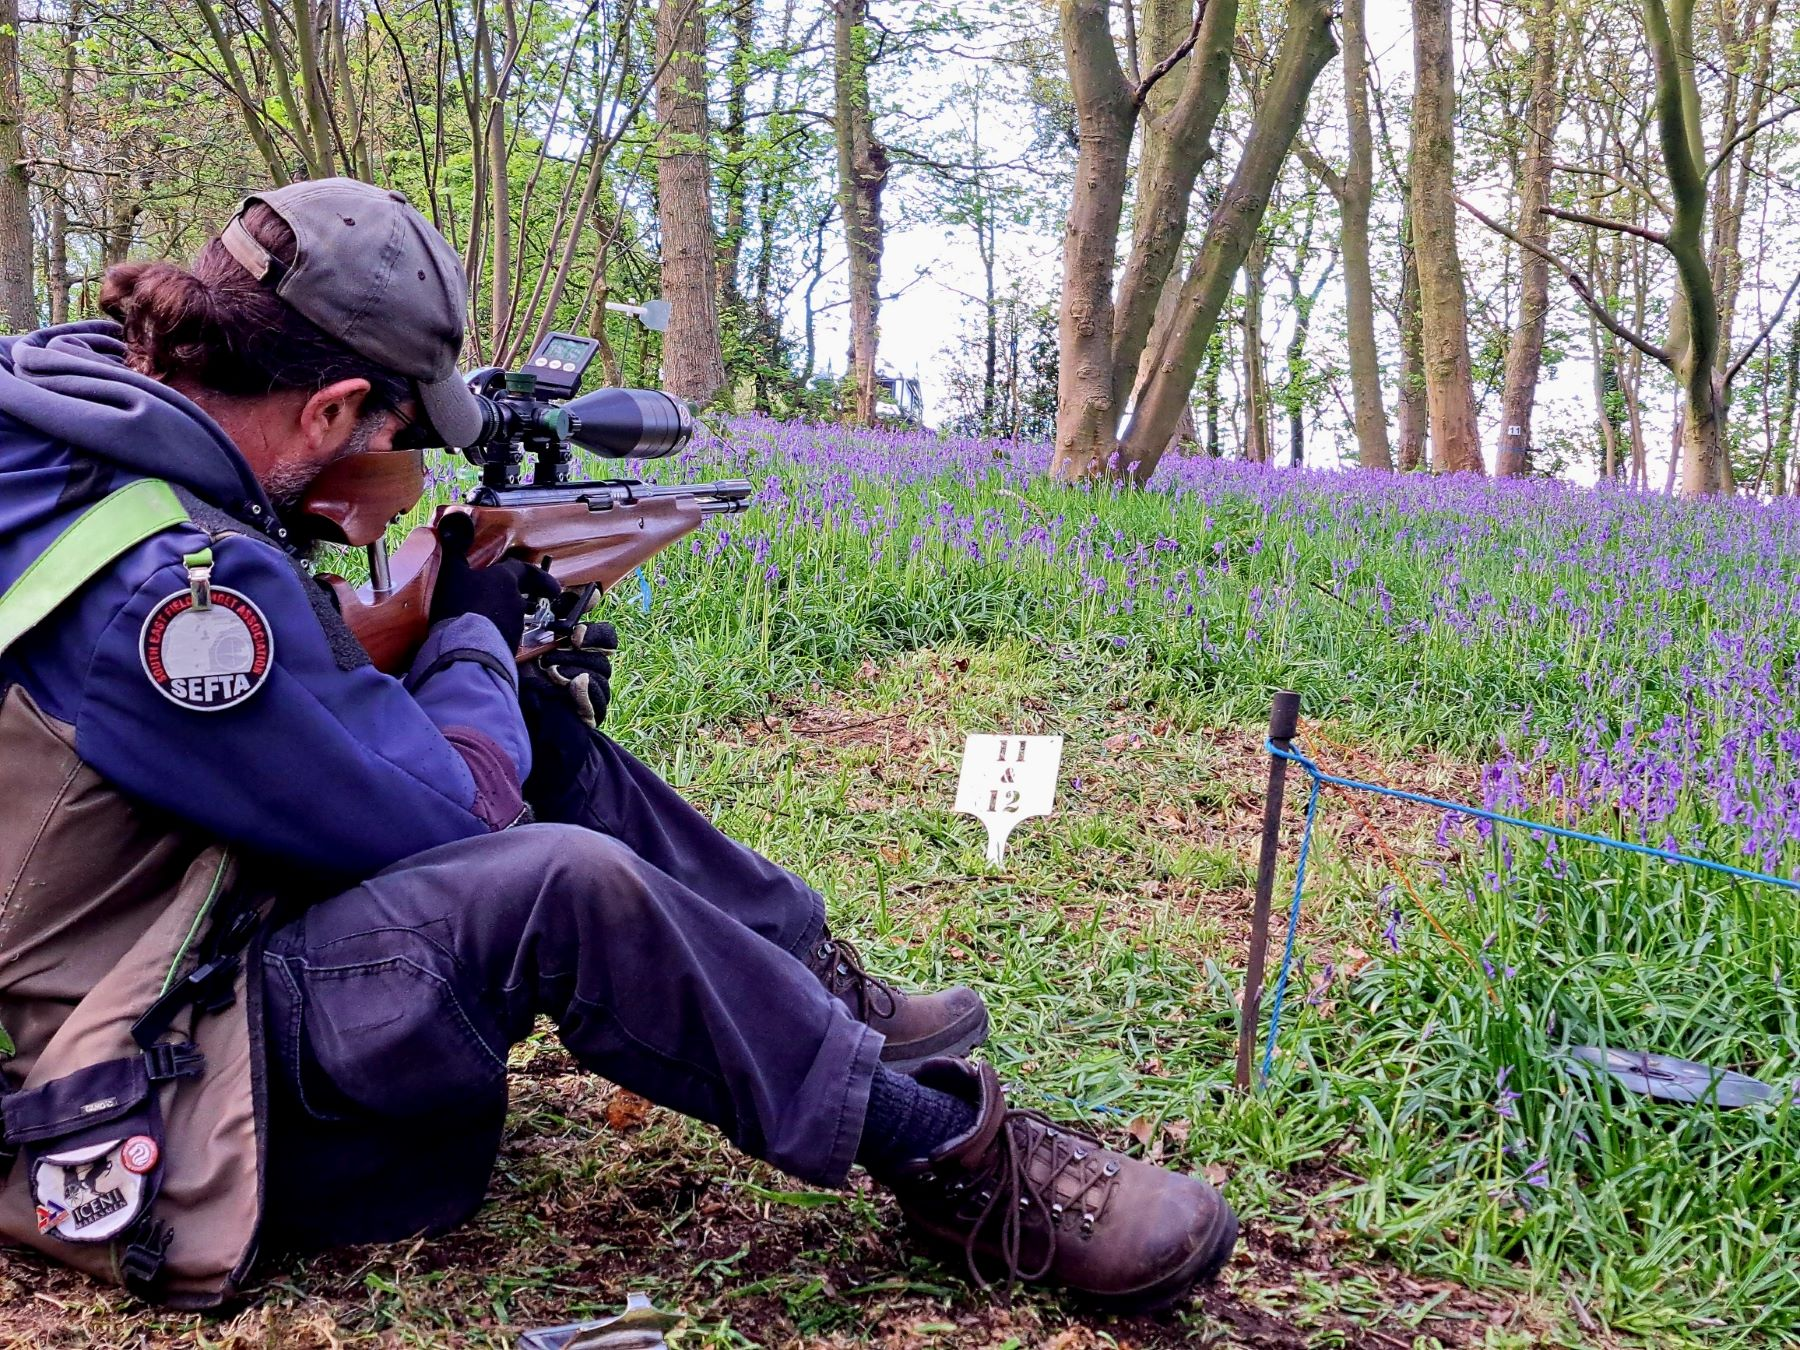 Steve Carter, New Air Arms Spring gun team member, shooting through the bluebells at Redfearns